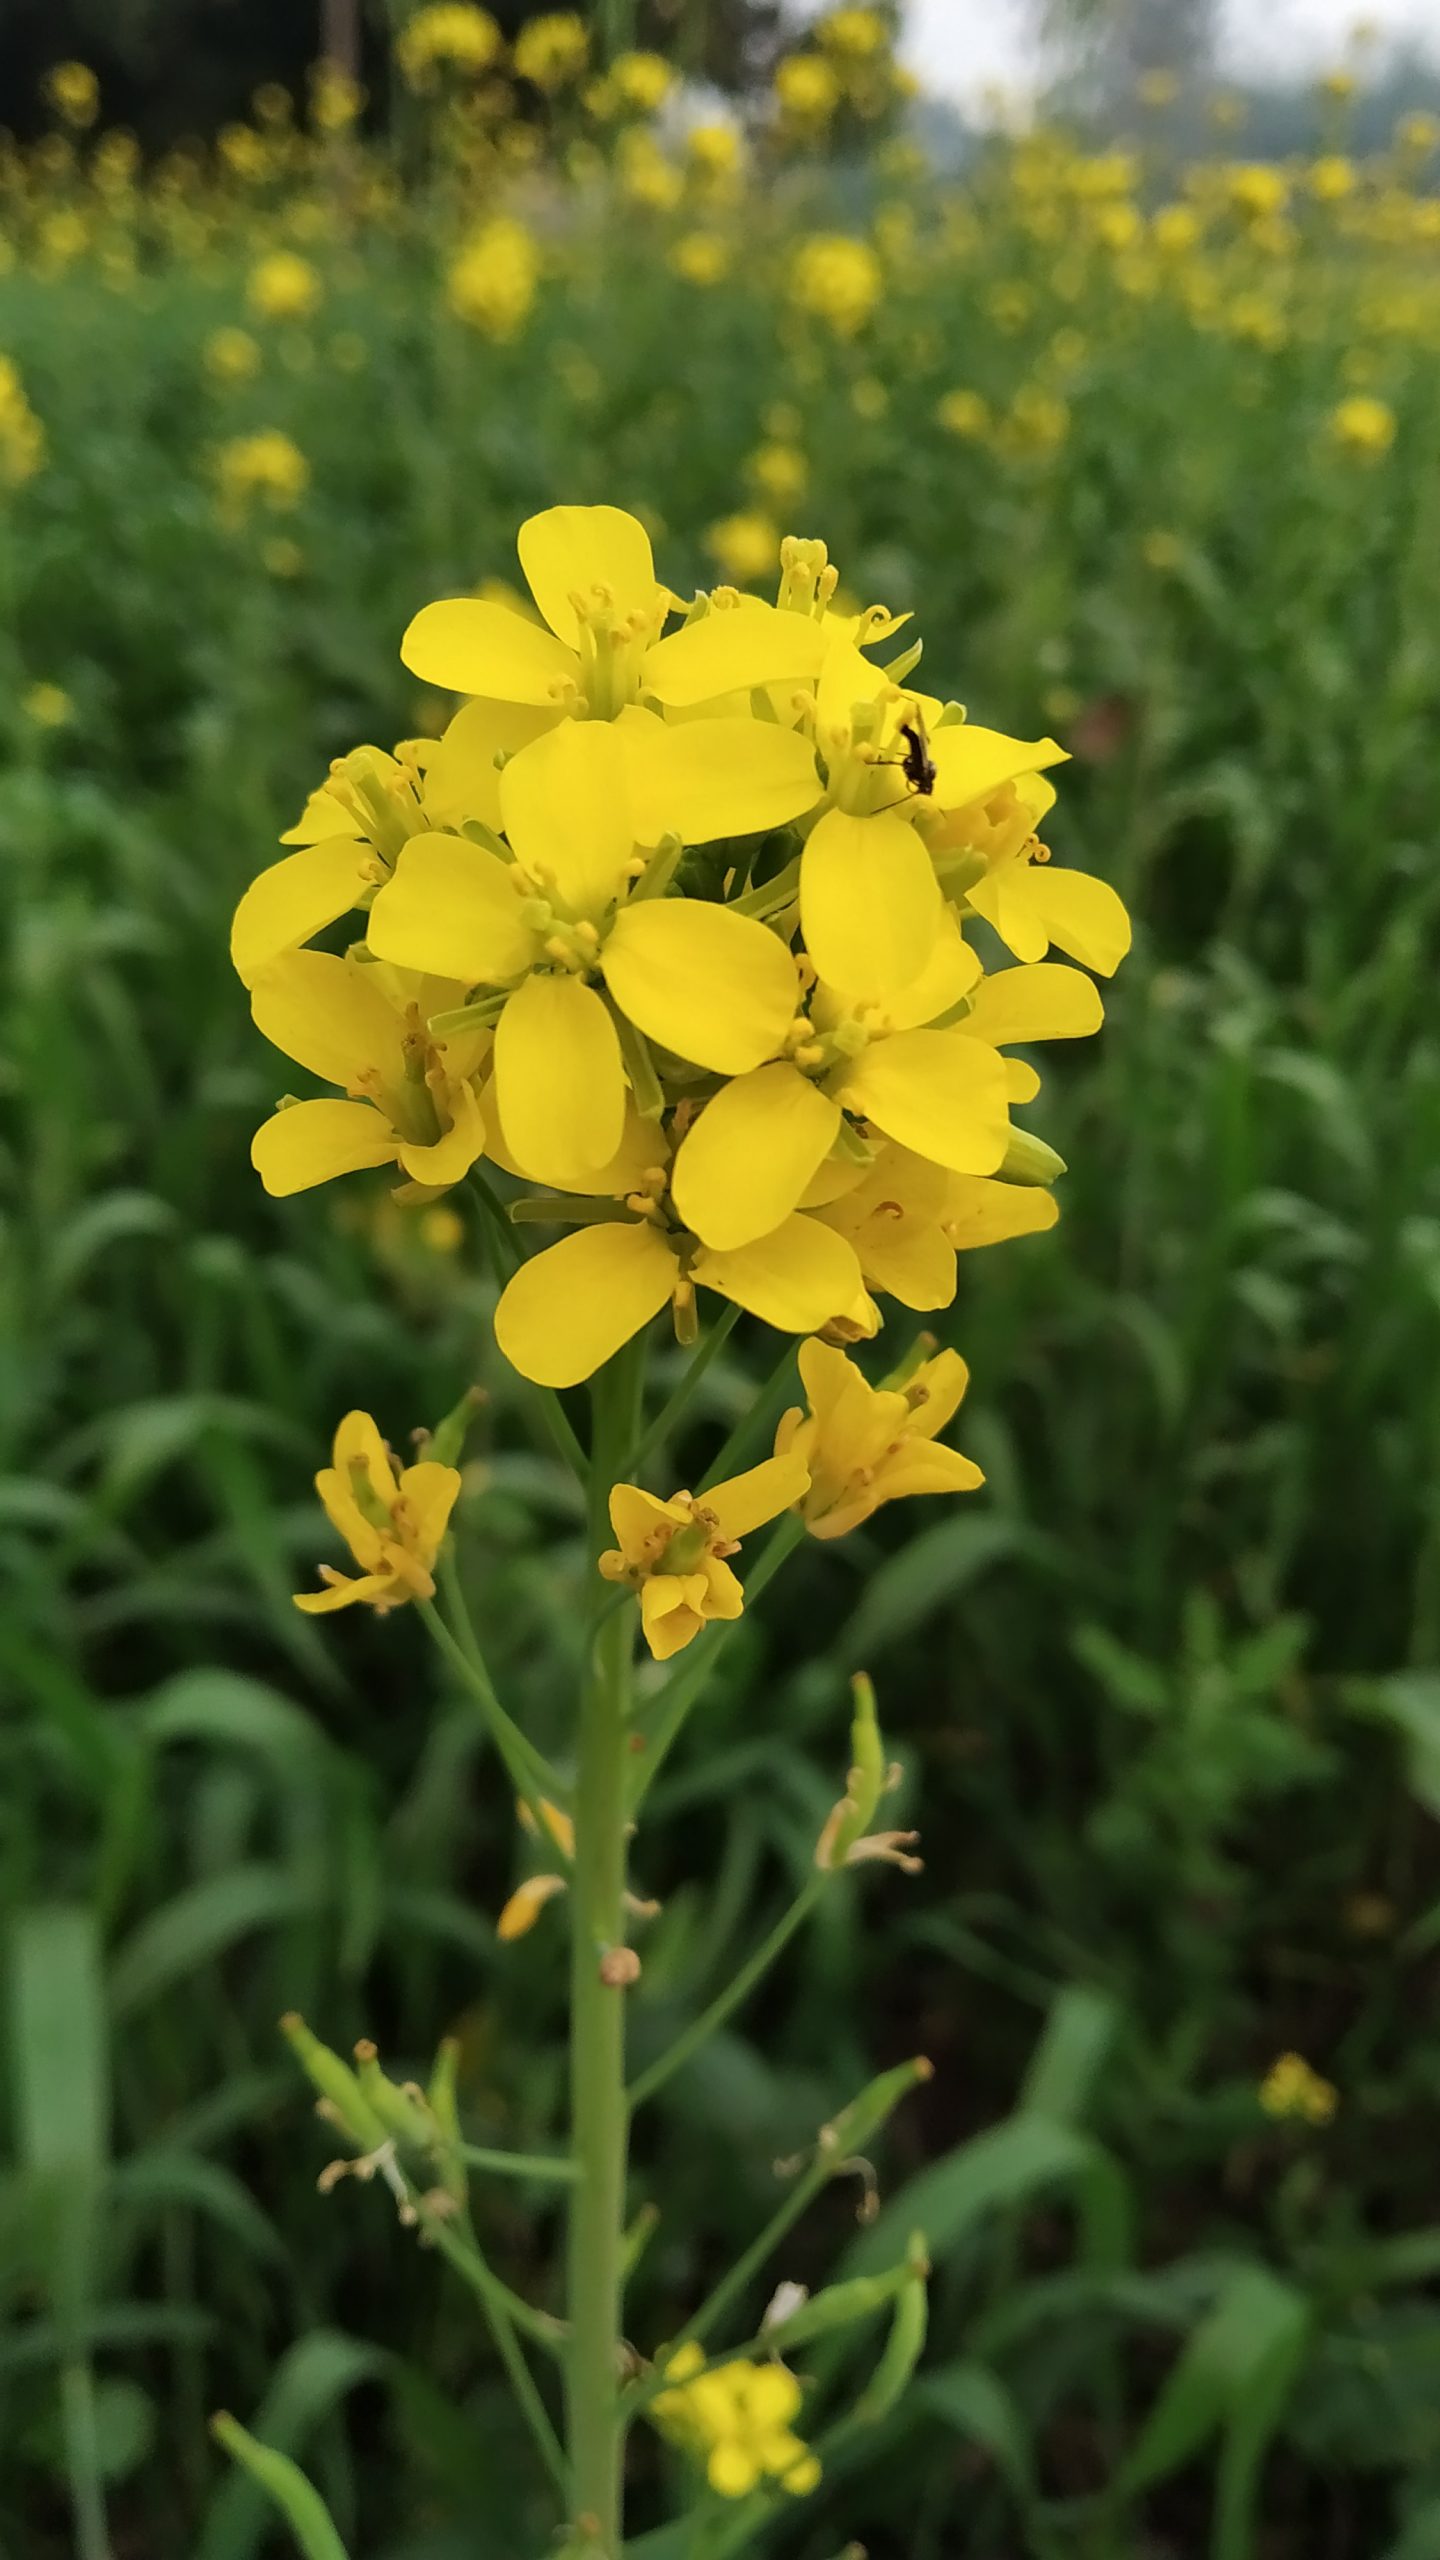 A mustard plant flower